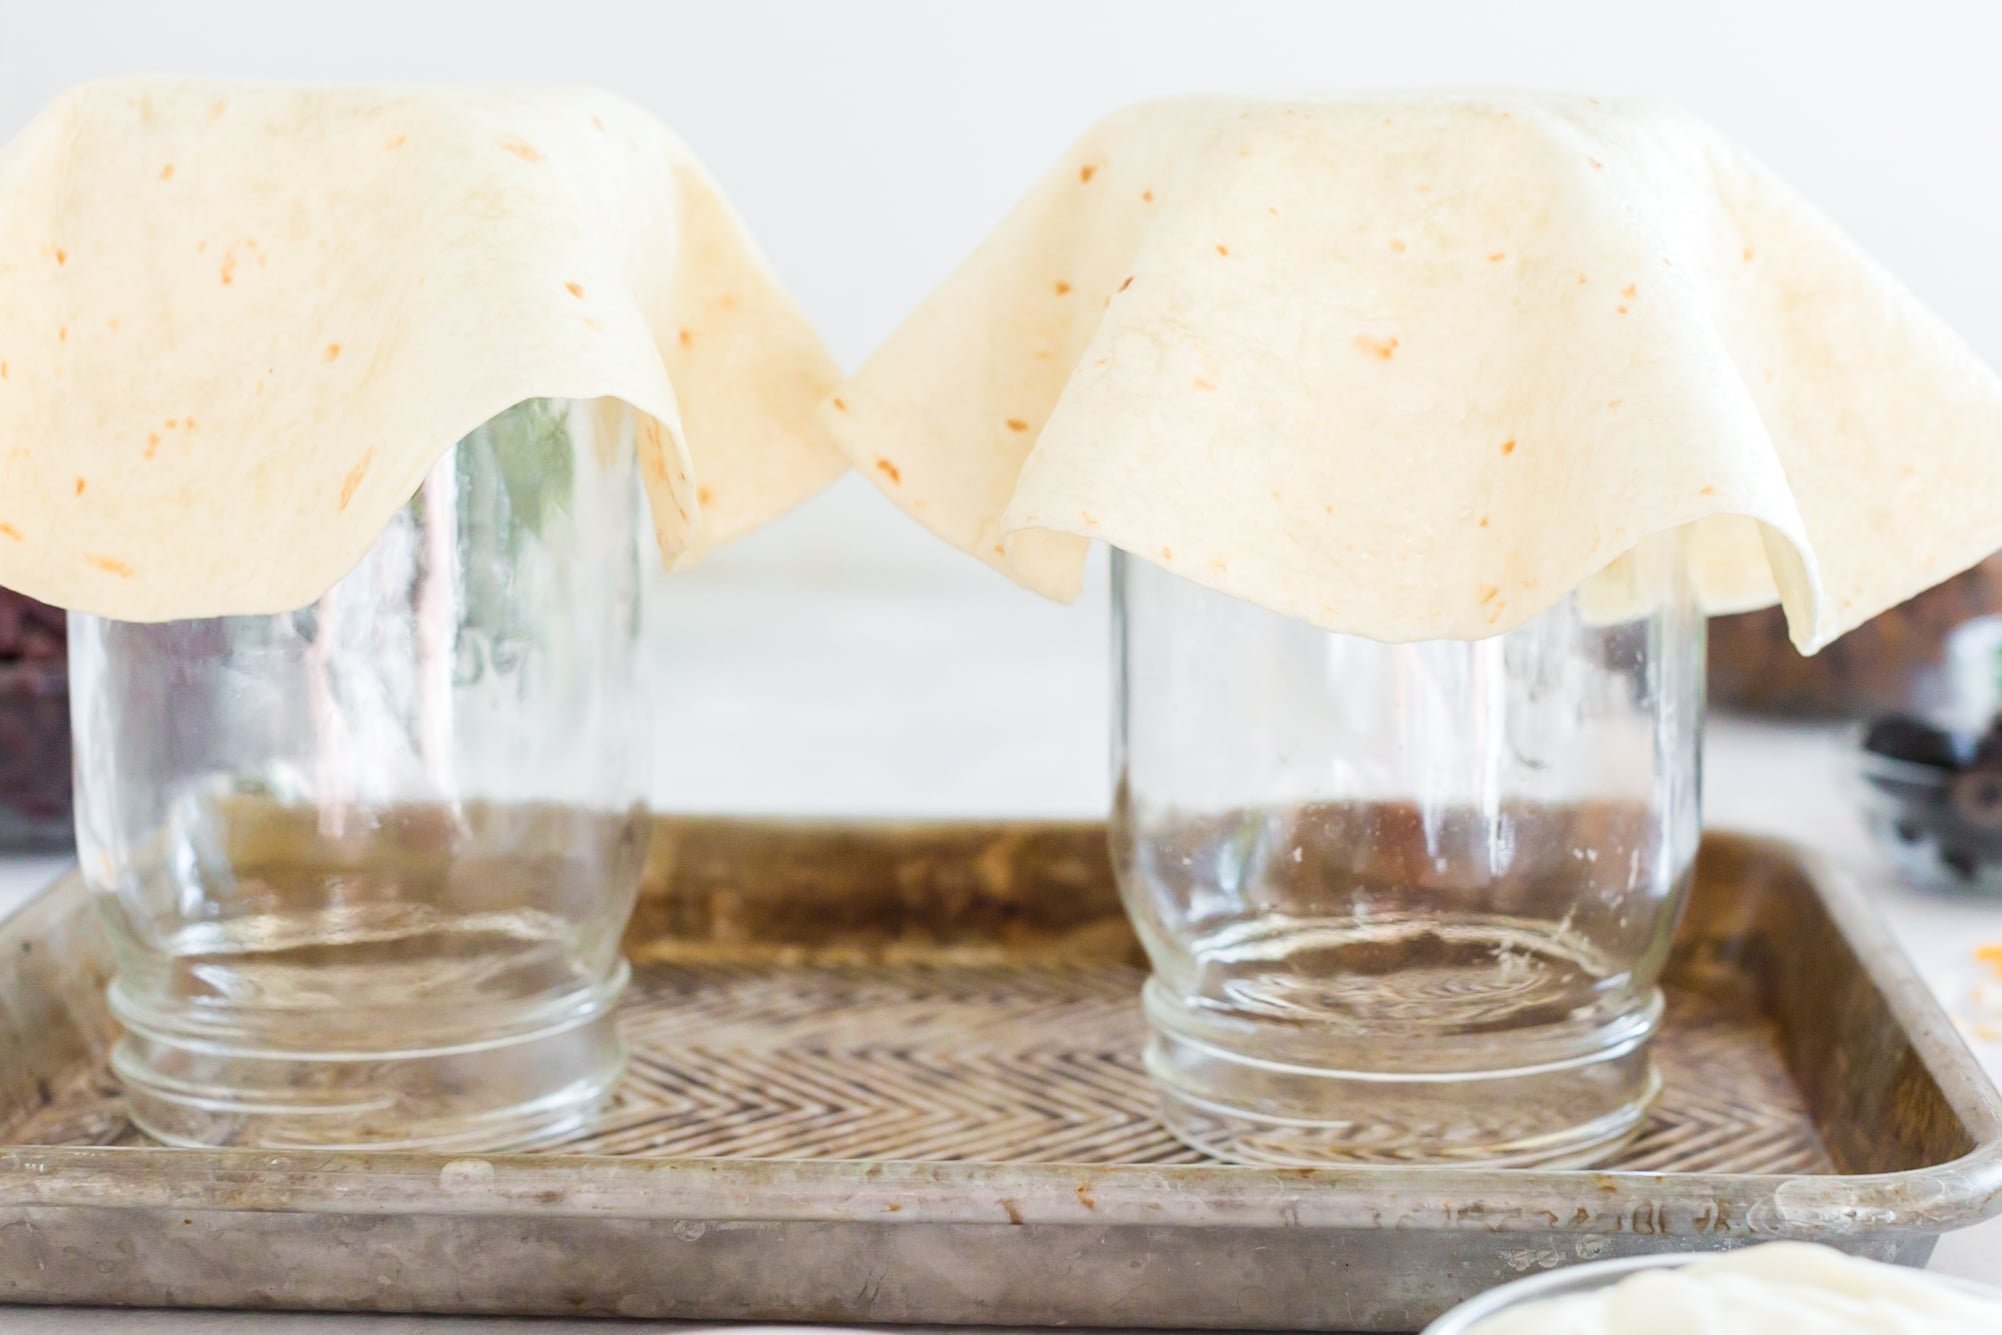 flour tortilla shaped slightly over the upside down mason jars to form tortilla bowl shape.